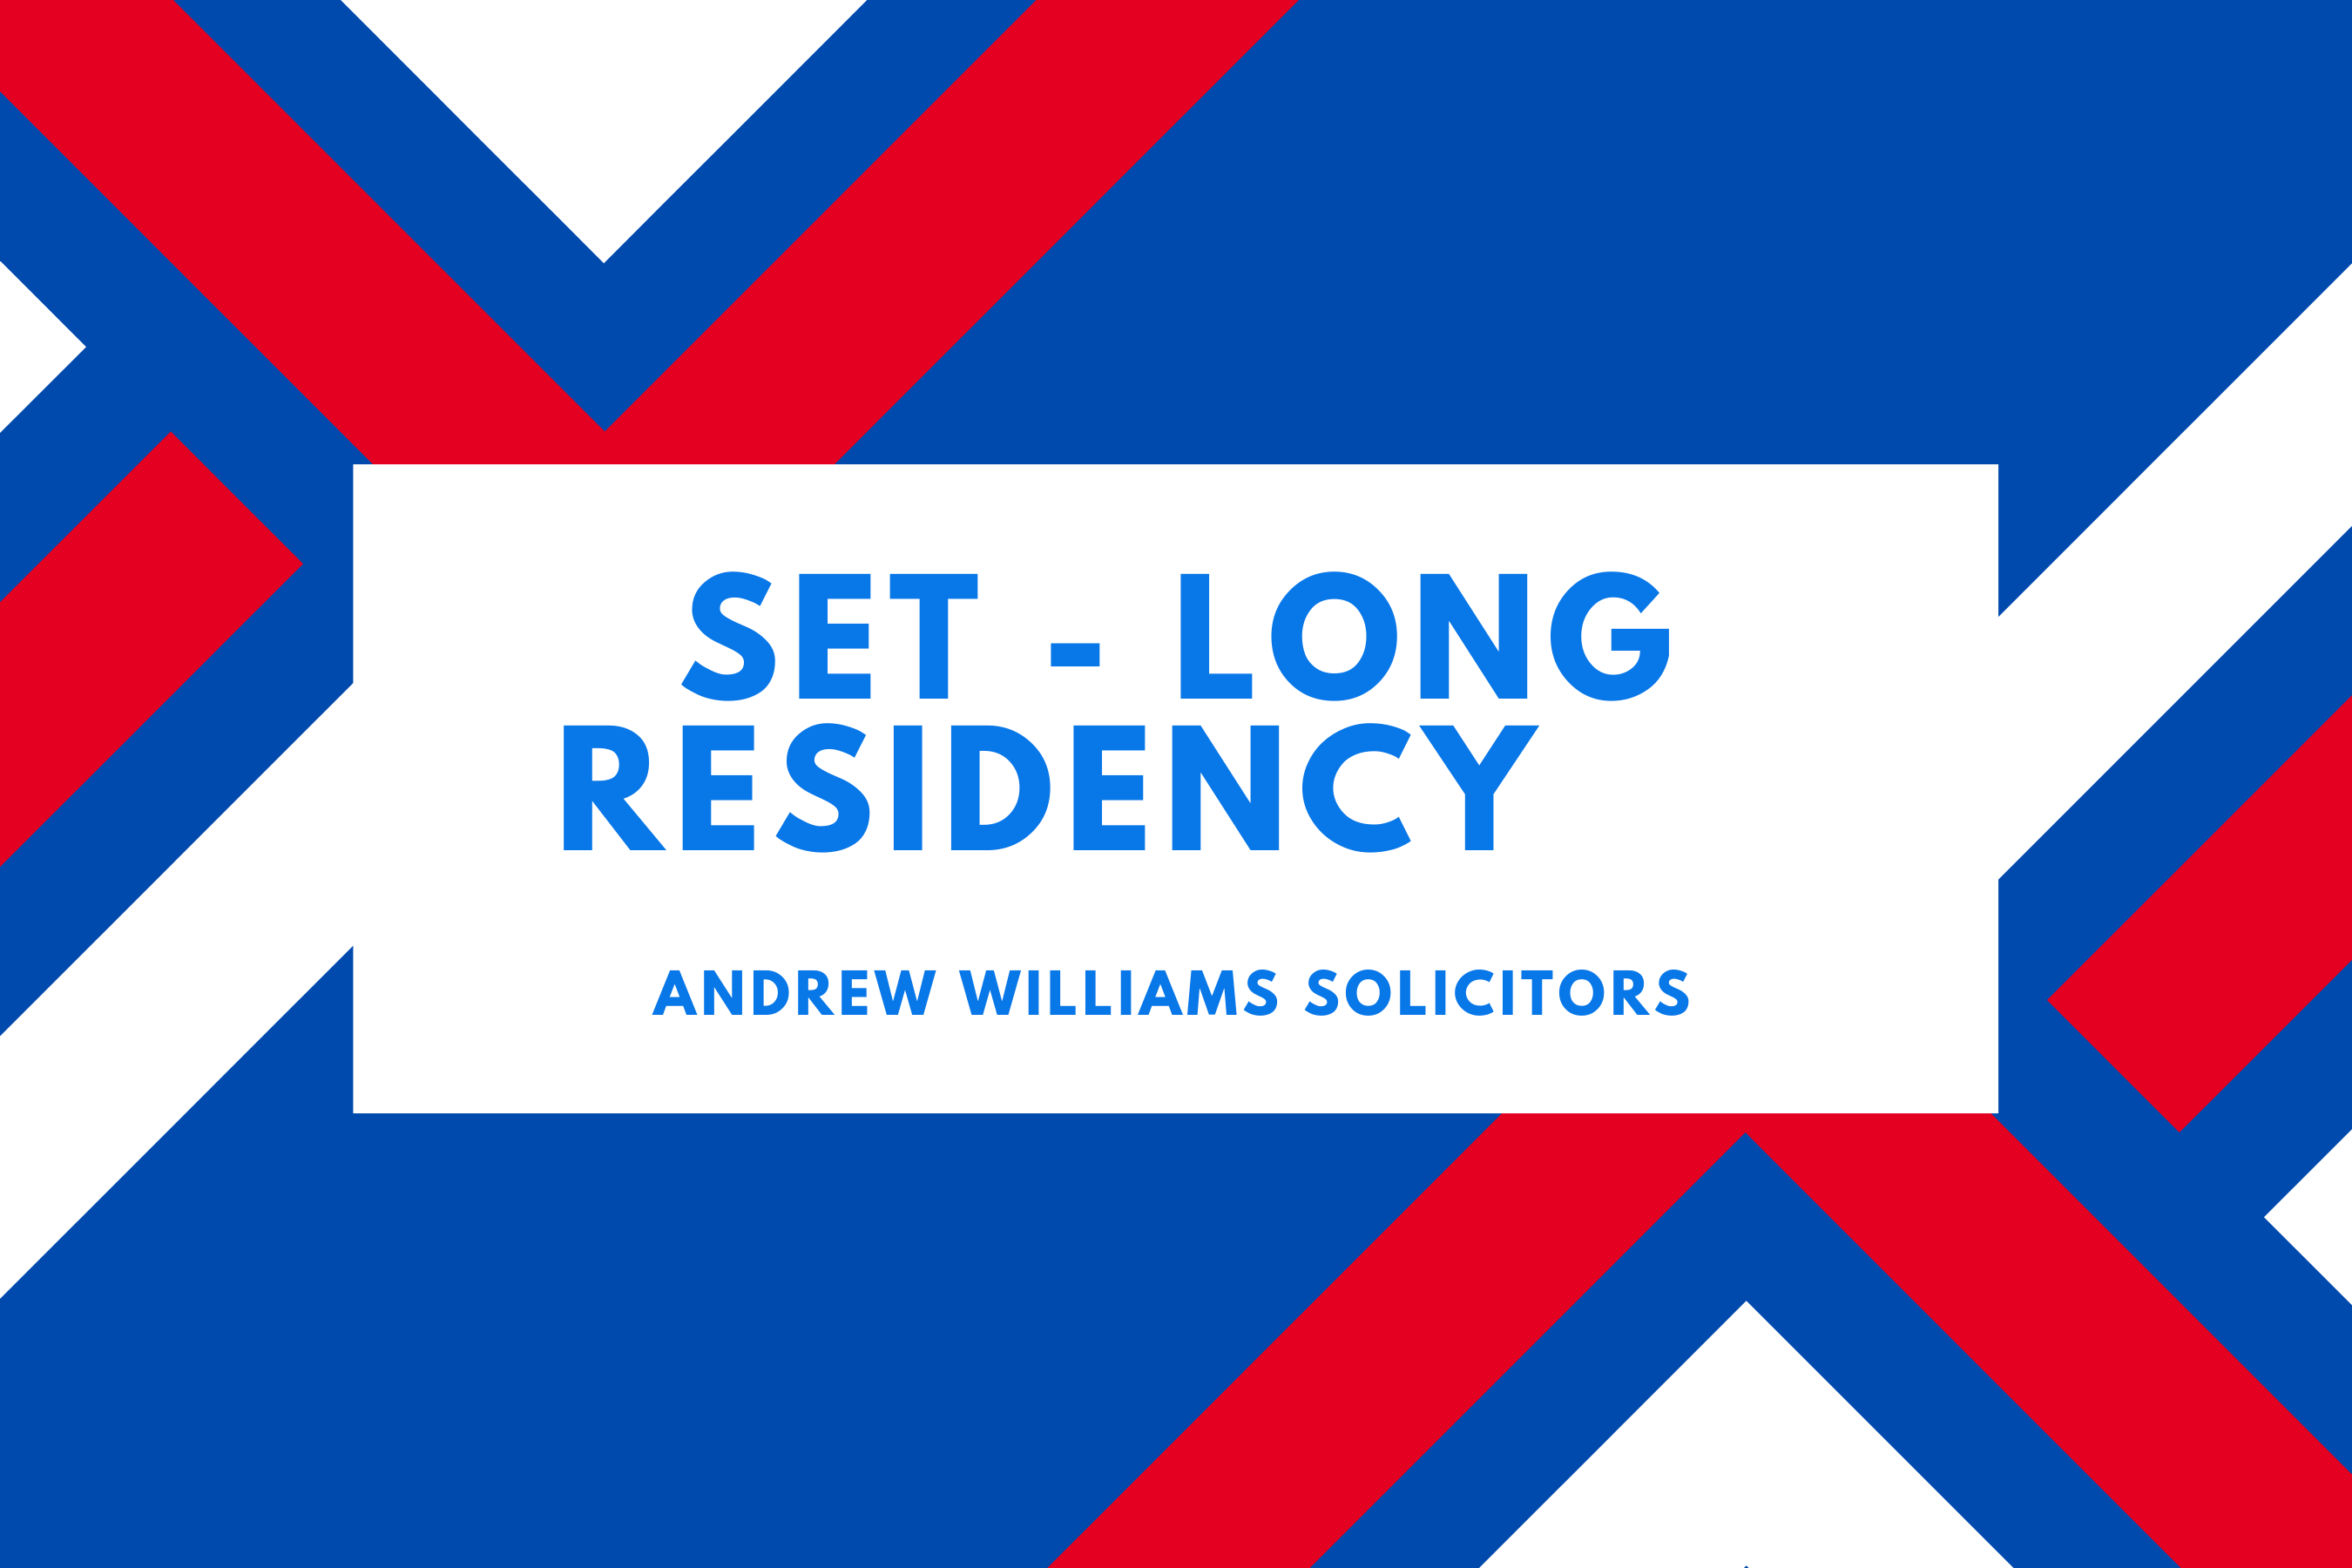 Settlement Long Residency (10 years or more)